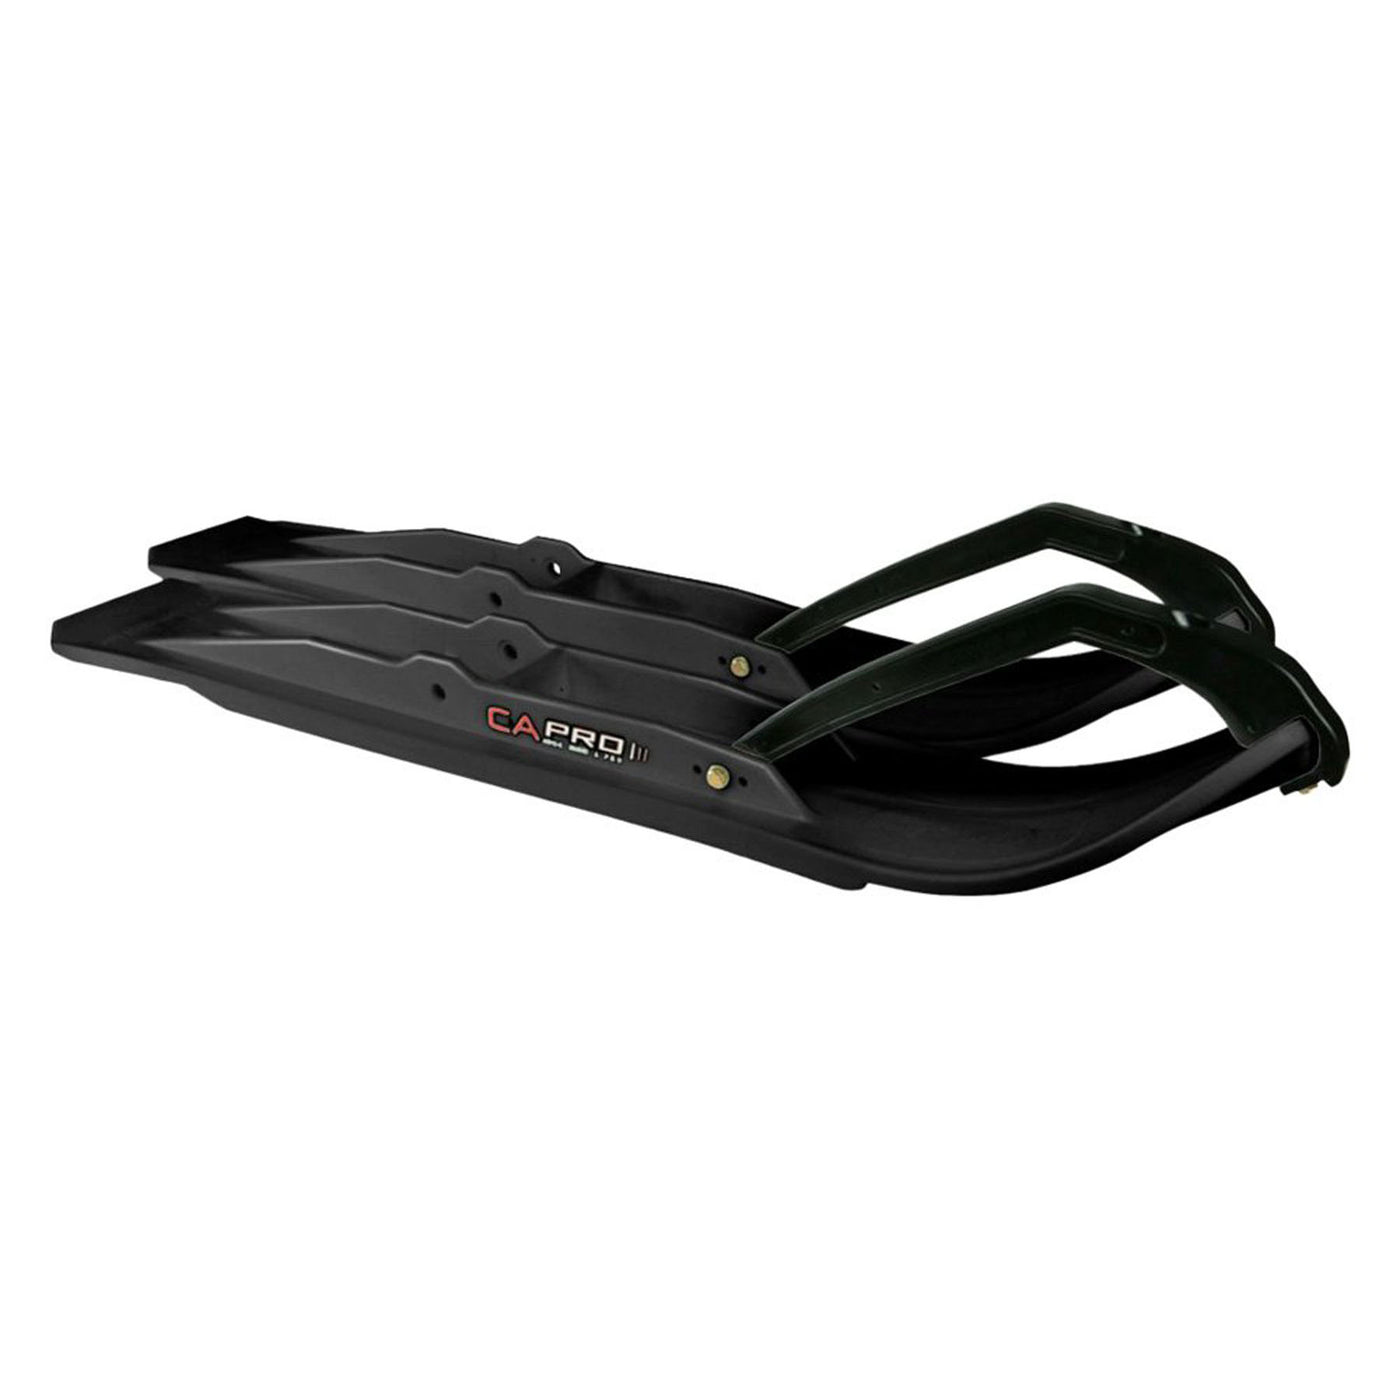 C&A Pro 479.95 Racing Ski - Black #77020332